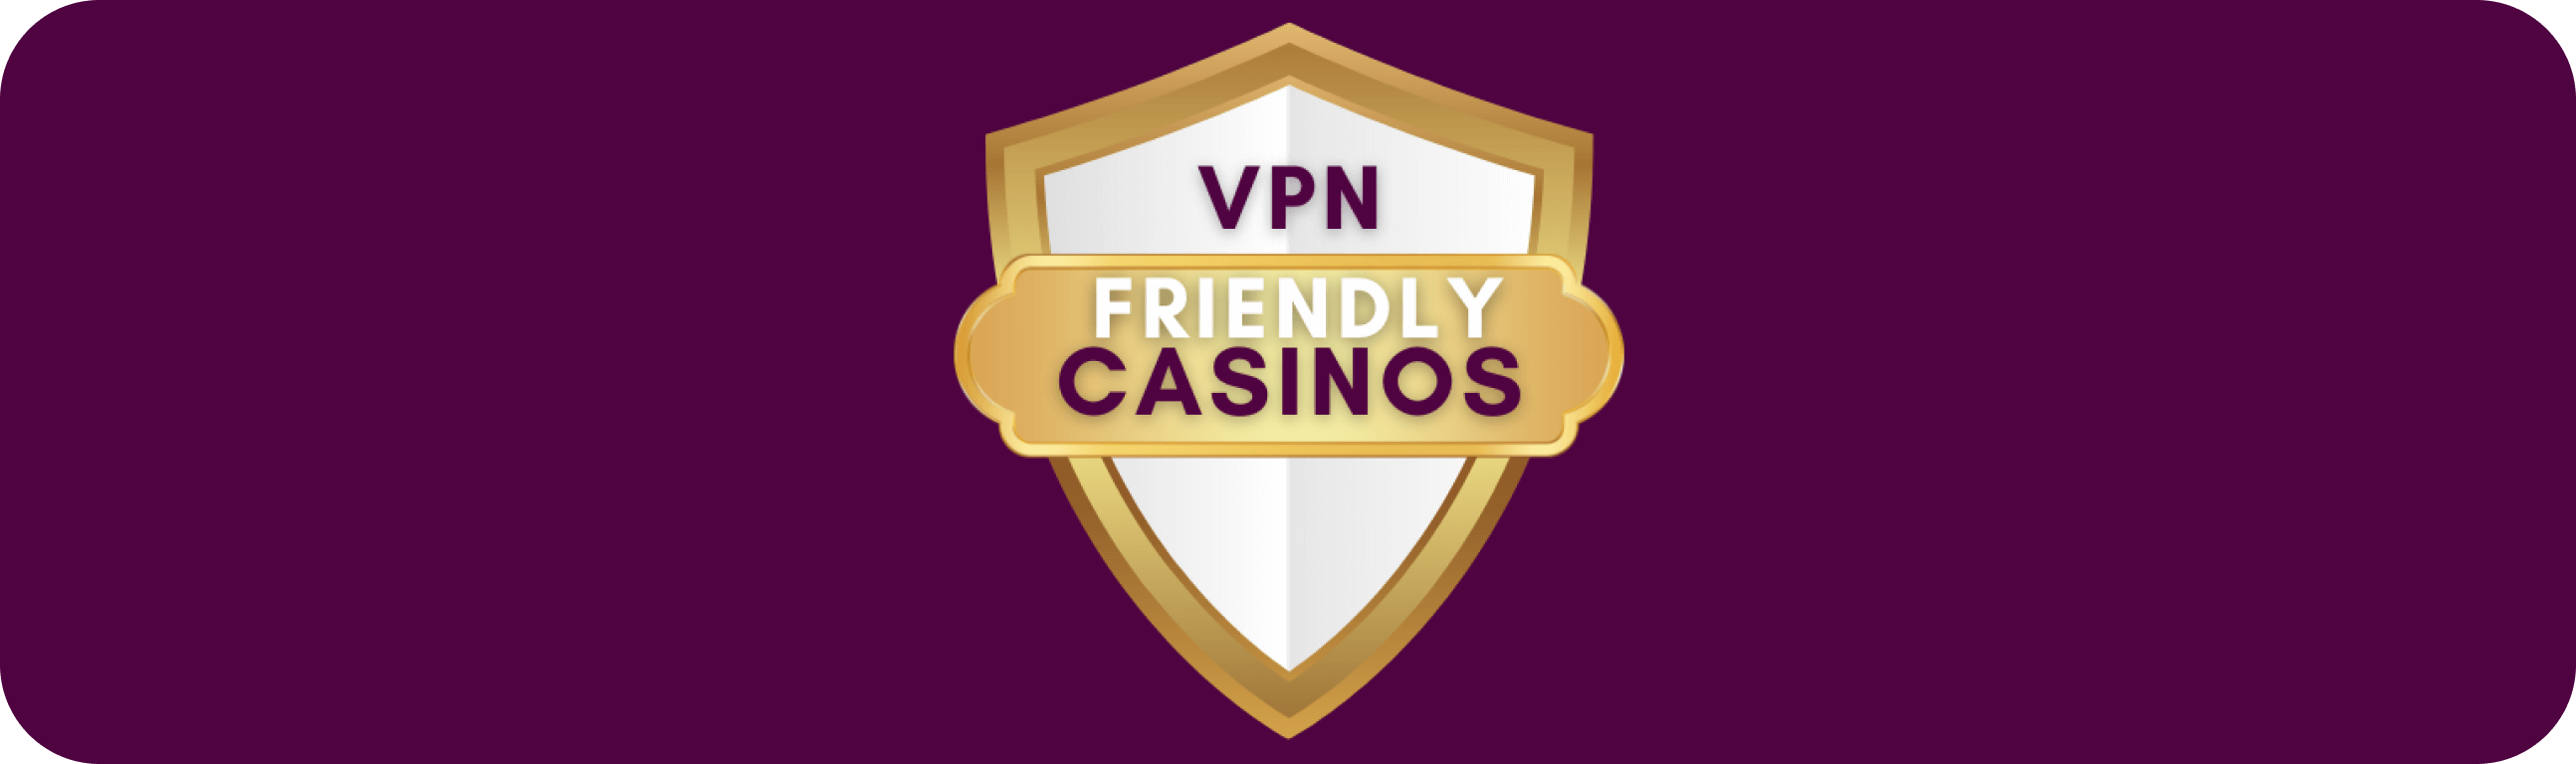 vpnfriendlycasinos logo